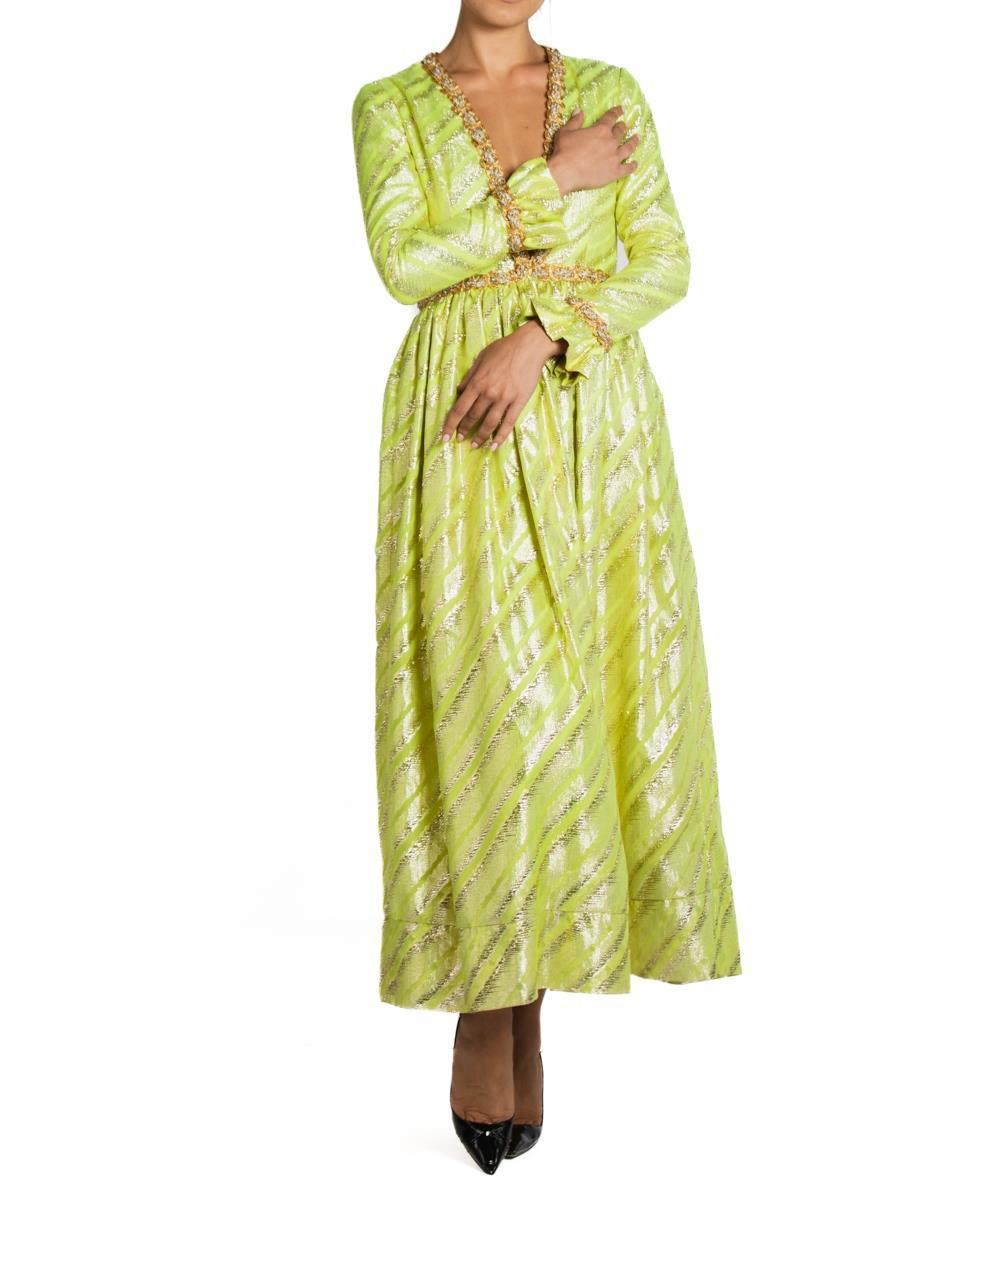 1960S Oscar De La Renta Lime Green Lurex Metallic Gown For Sale 3